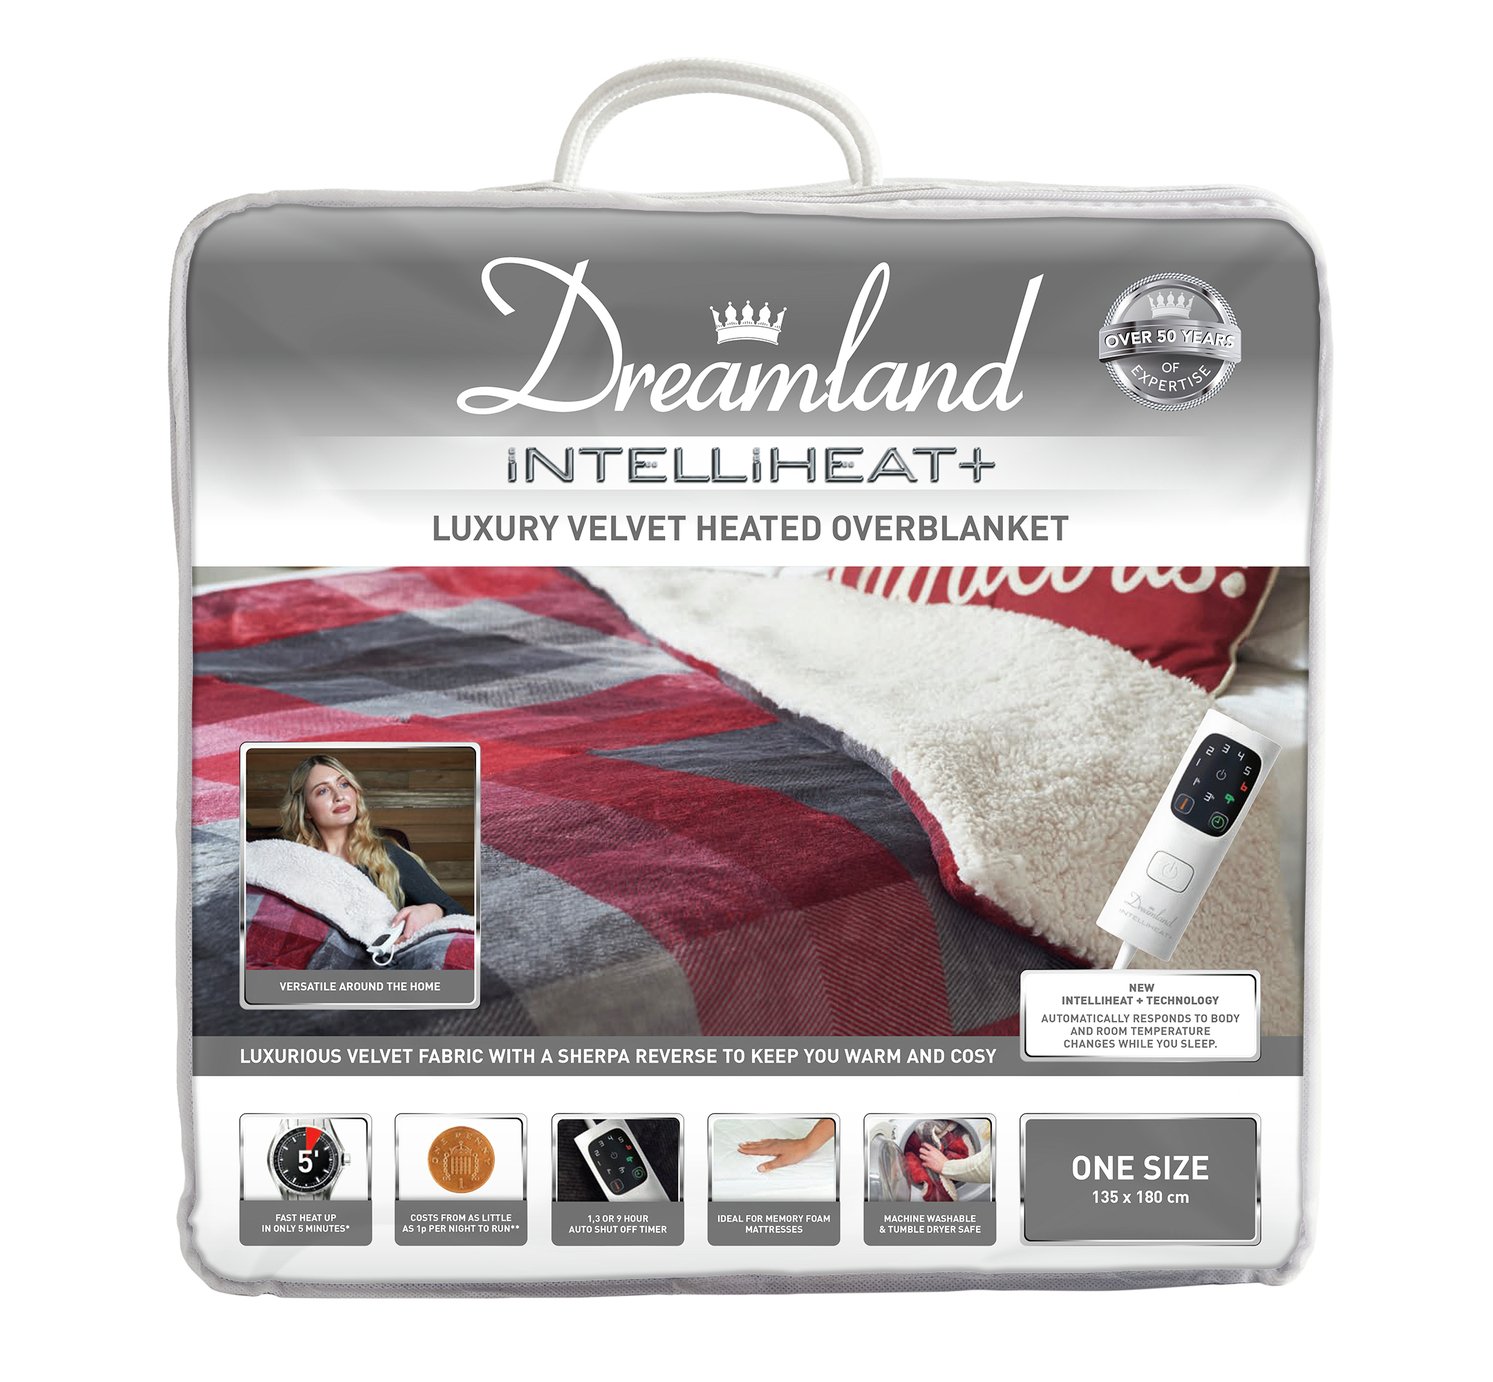 Dreamland Intelliheat Overblanket Reviews - Updated February 2024